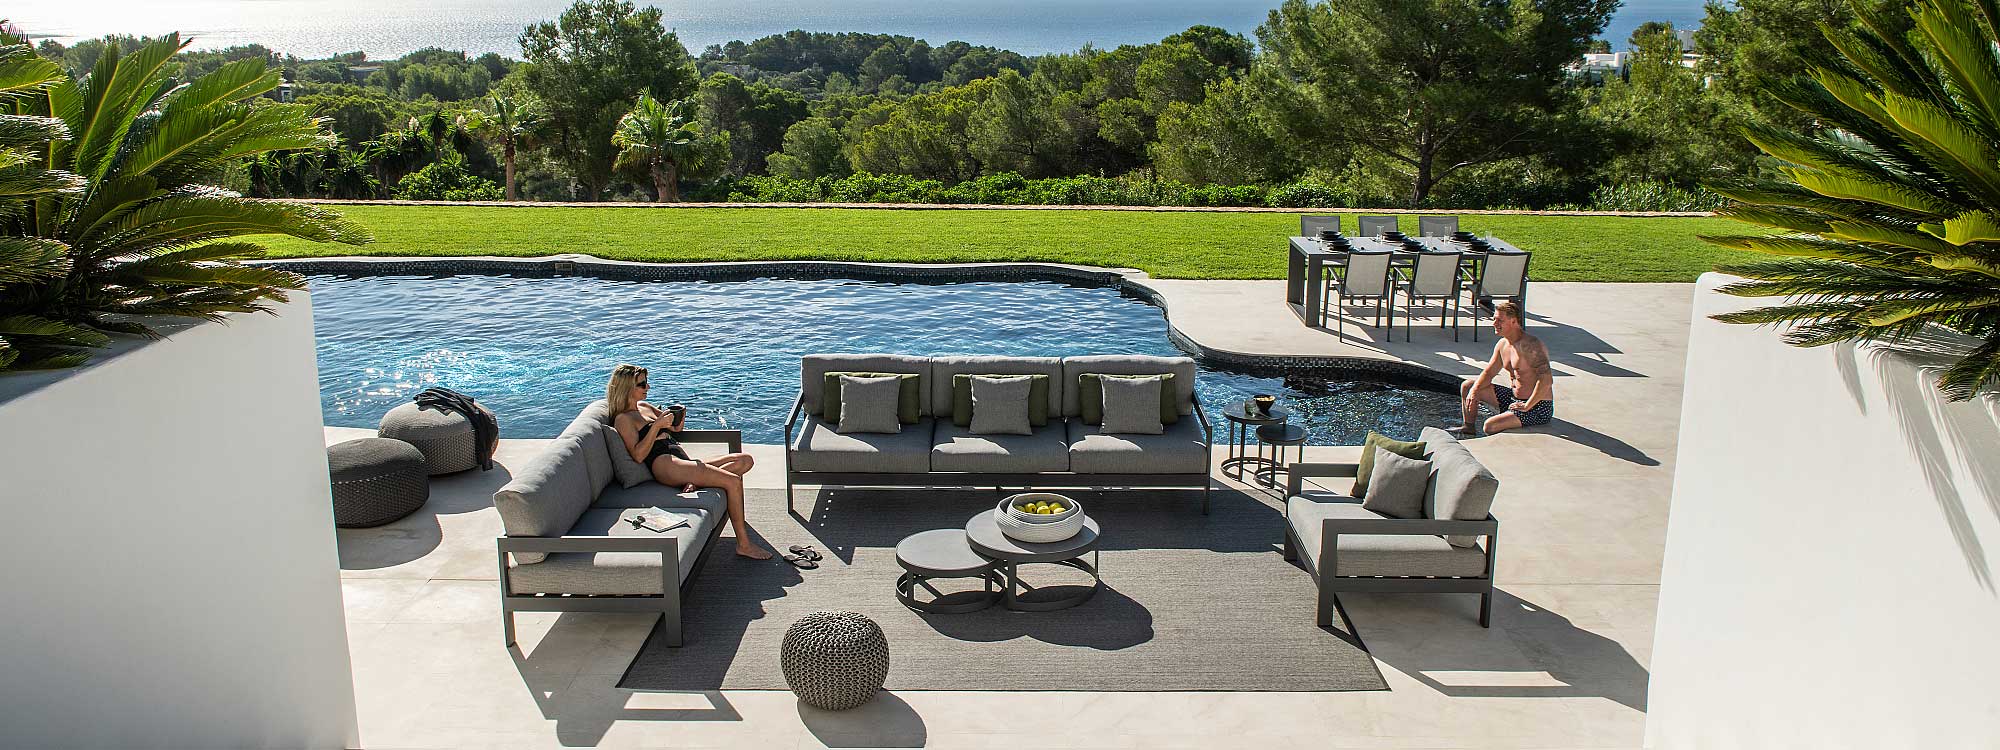 Vigo XL garden lounge set & outdoor sofas is modern aluminium garden furniture by Jati & Kebon trendy exterior furniture company.